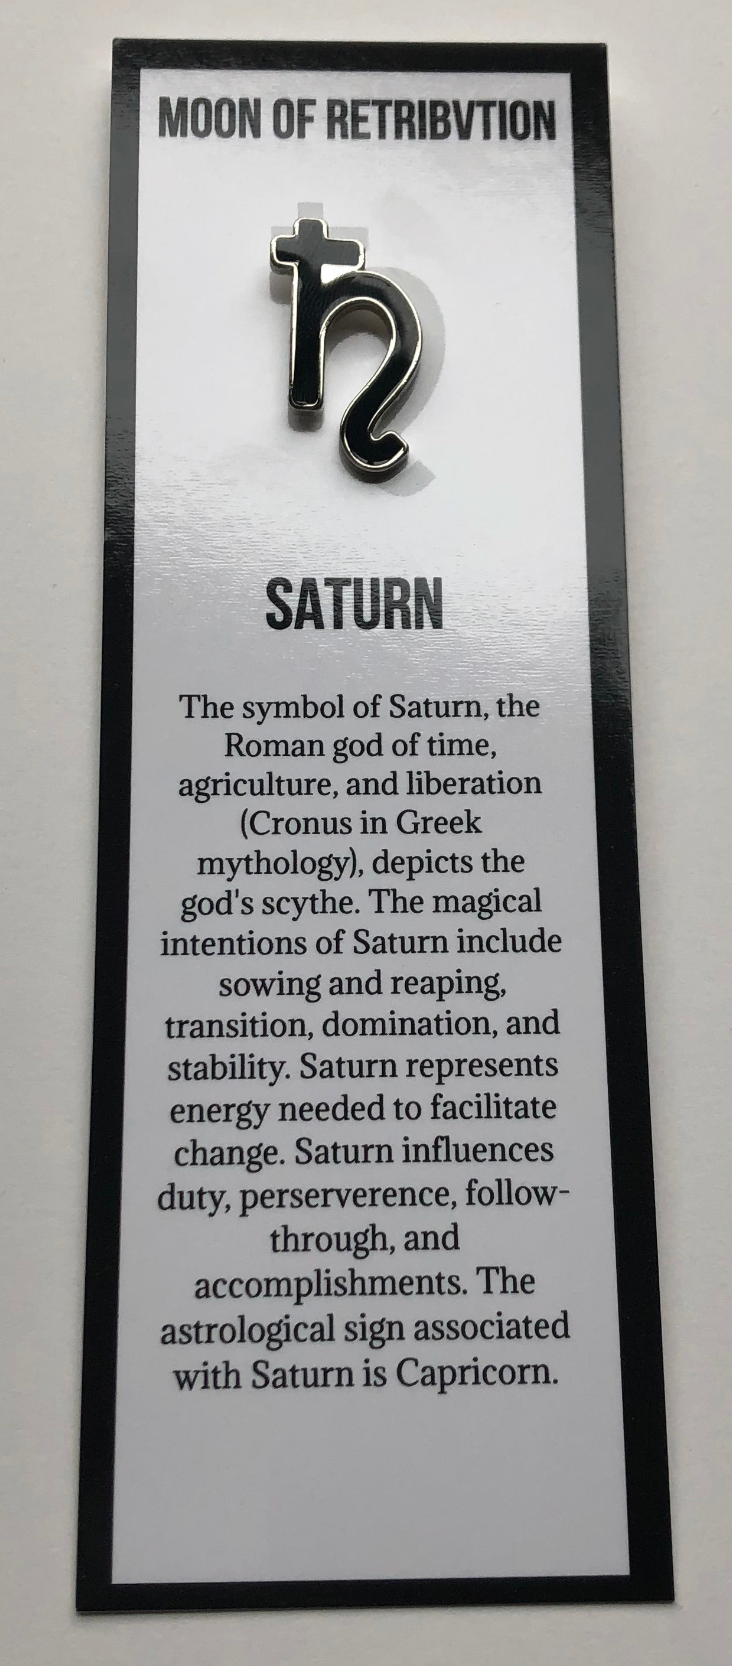 Saturn Celestial Bodies Soft Enamel Pins (Capricorn)